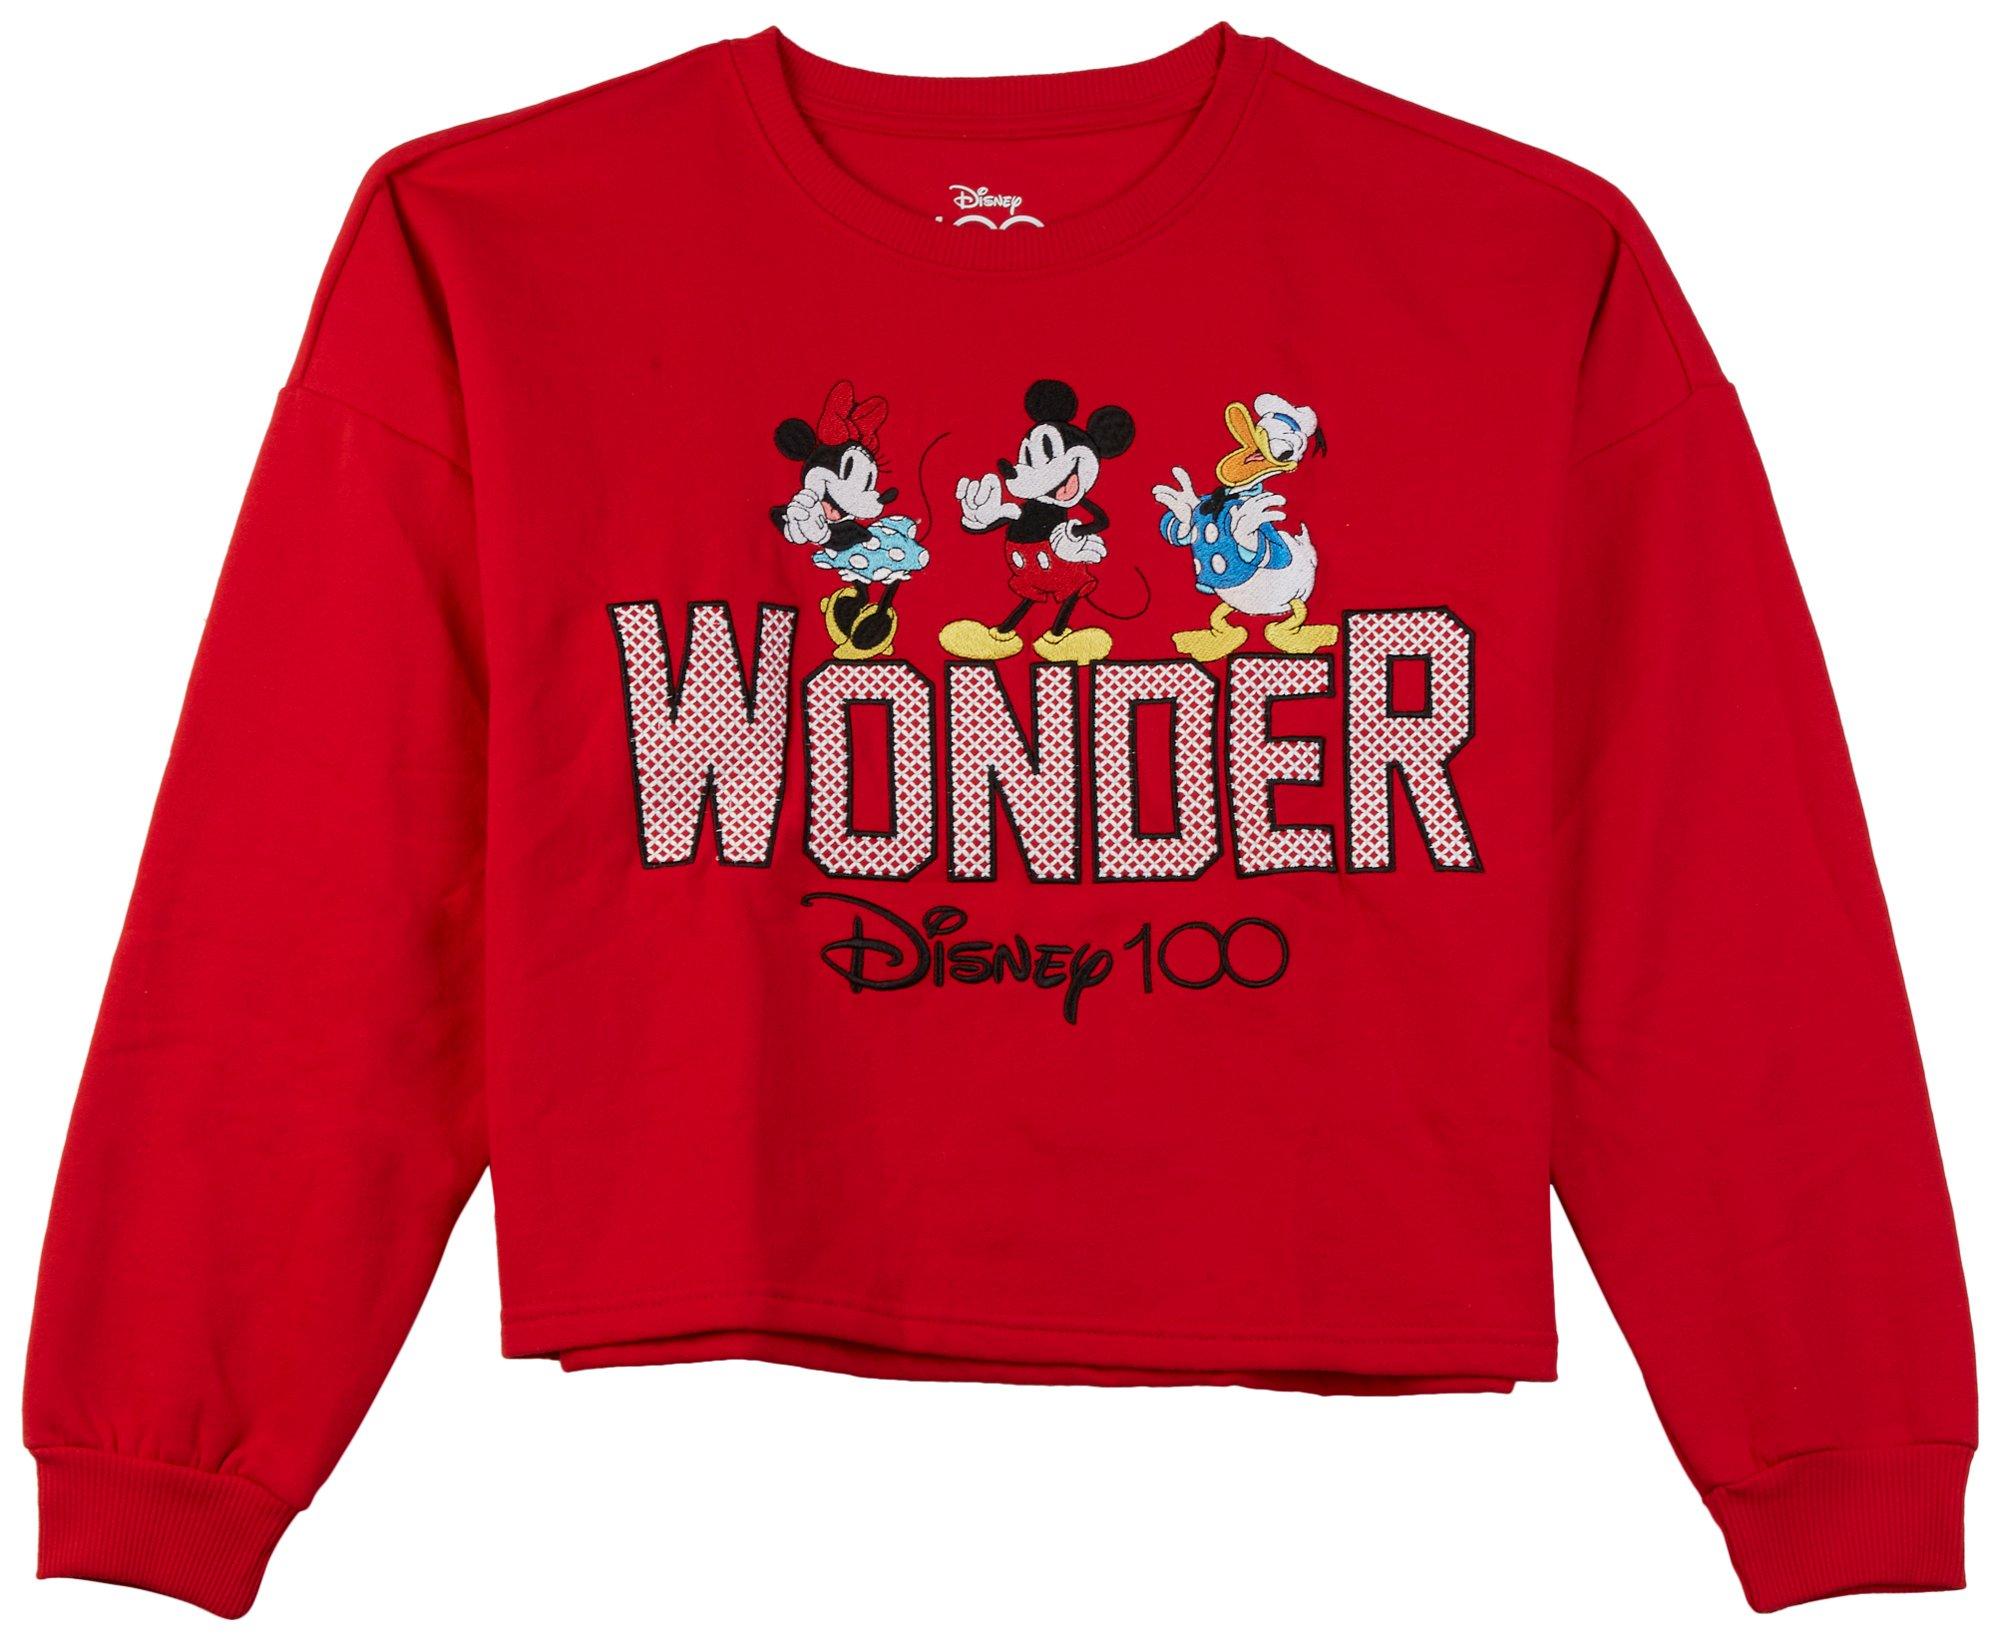 Disney Juniors Embroidered Disney 100 Long Sleeve Sweater